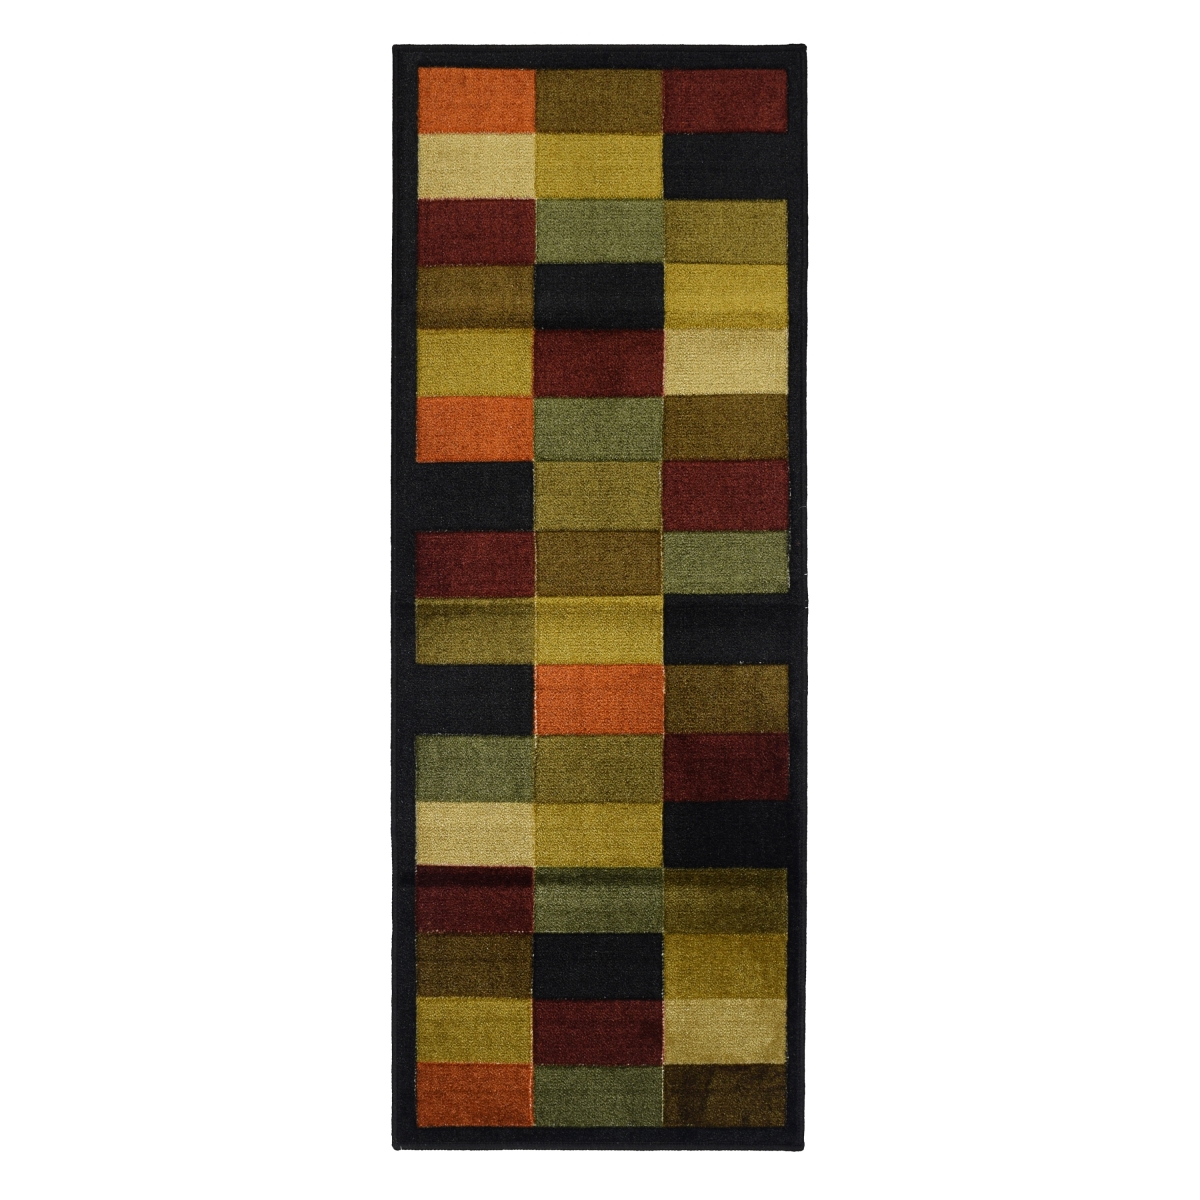 Colbl-22x59 20 X 59.5 In. Color Blocks Rug Runner, Multi-color